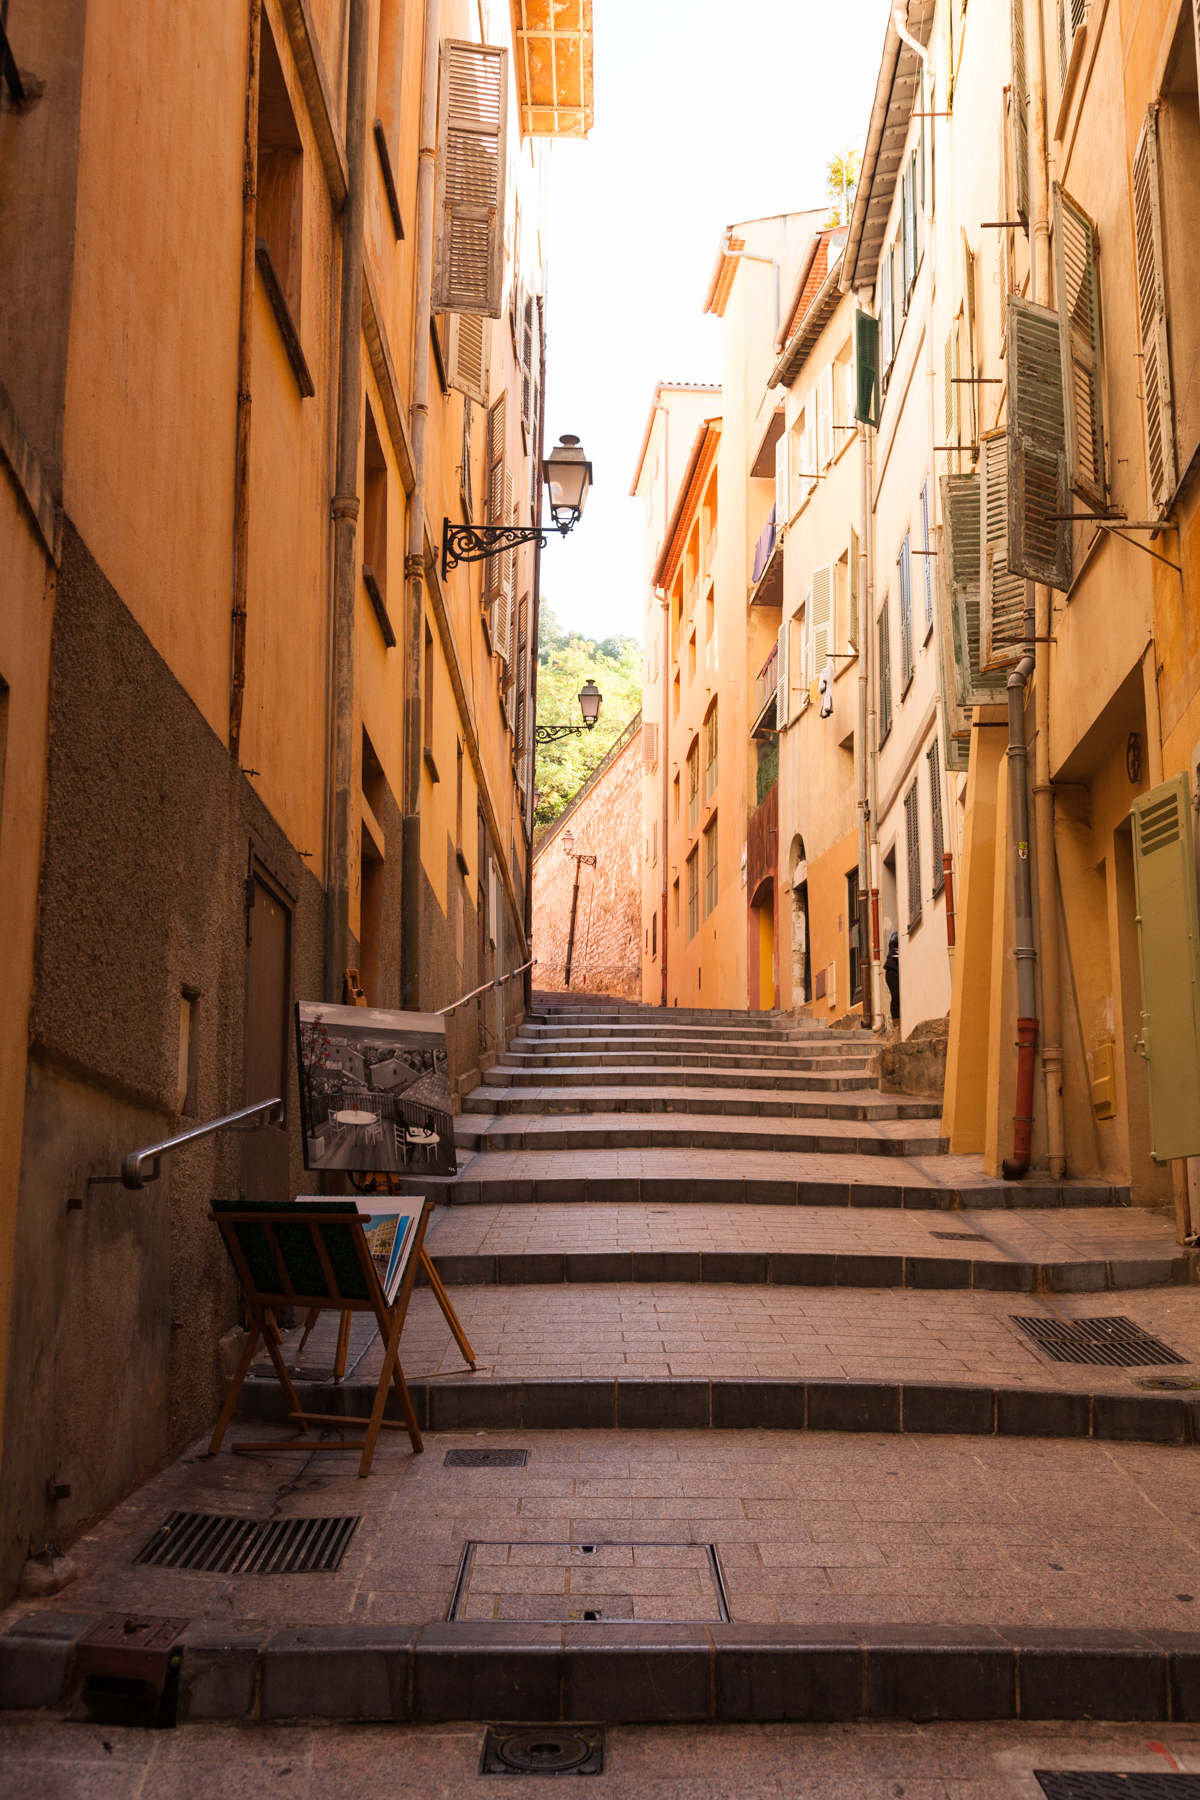 Shot of steps and street scene in Nice.